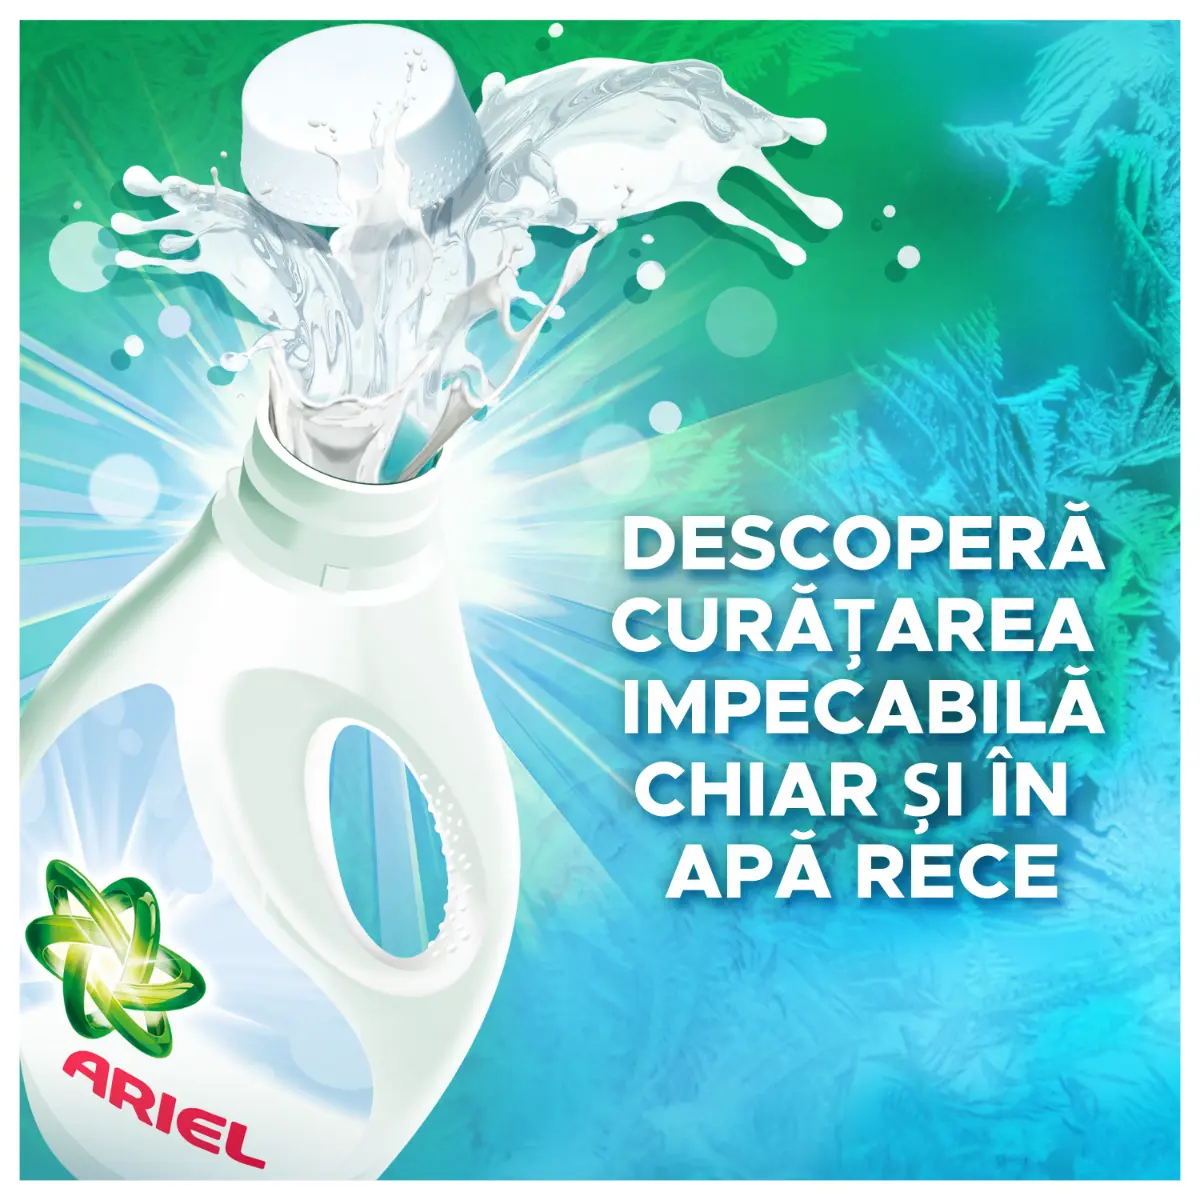 Detergent de rufe lichid Ariel Sensitive Skin, 40 spalari, 2L